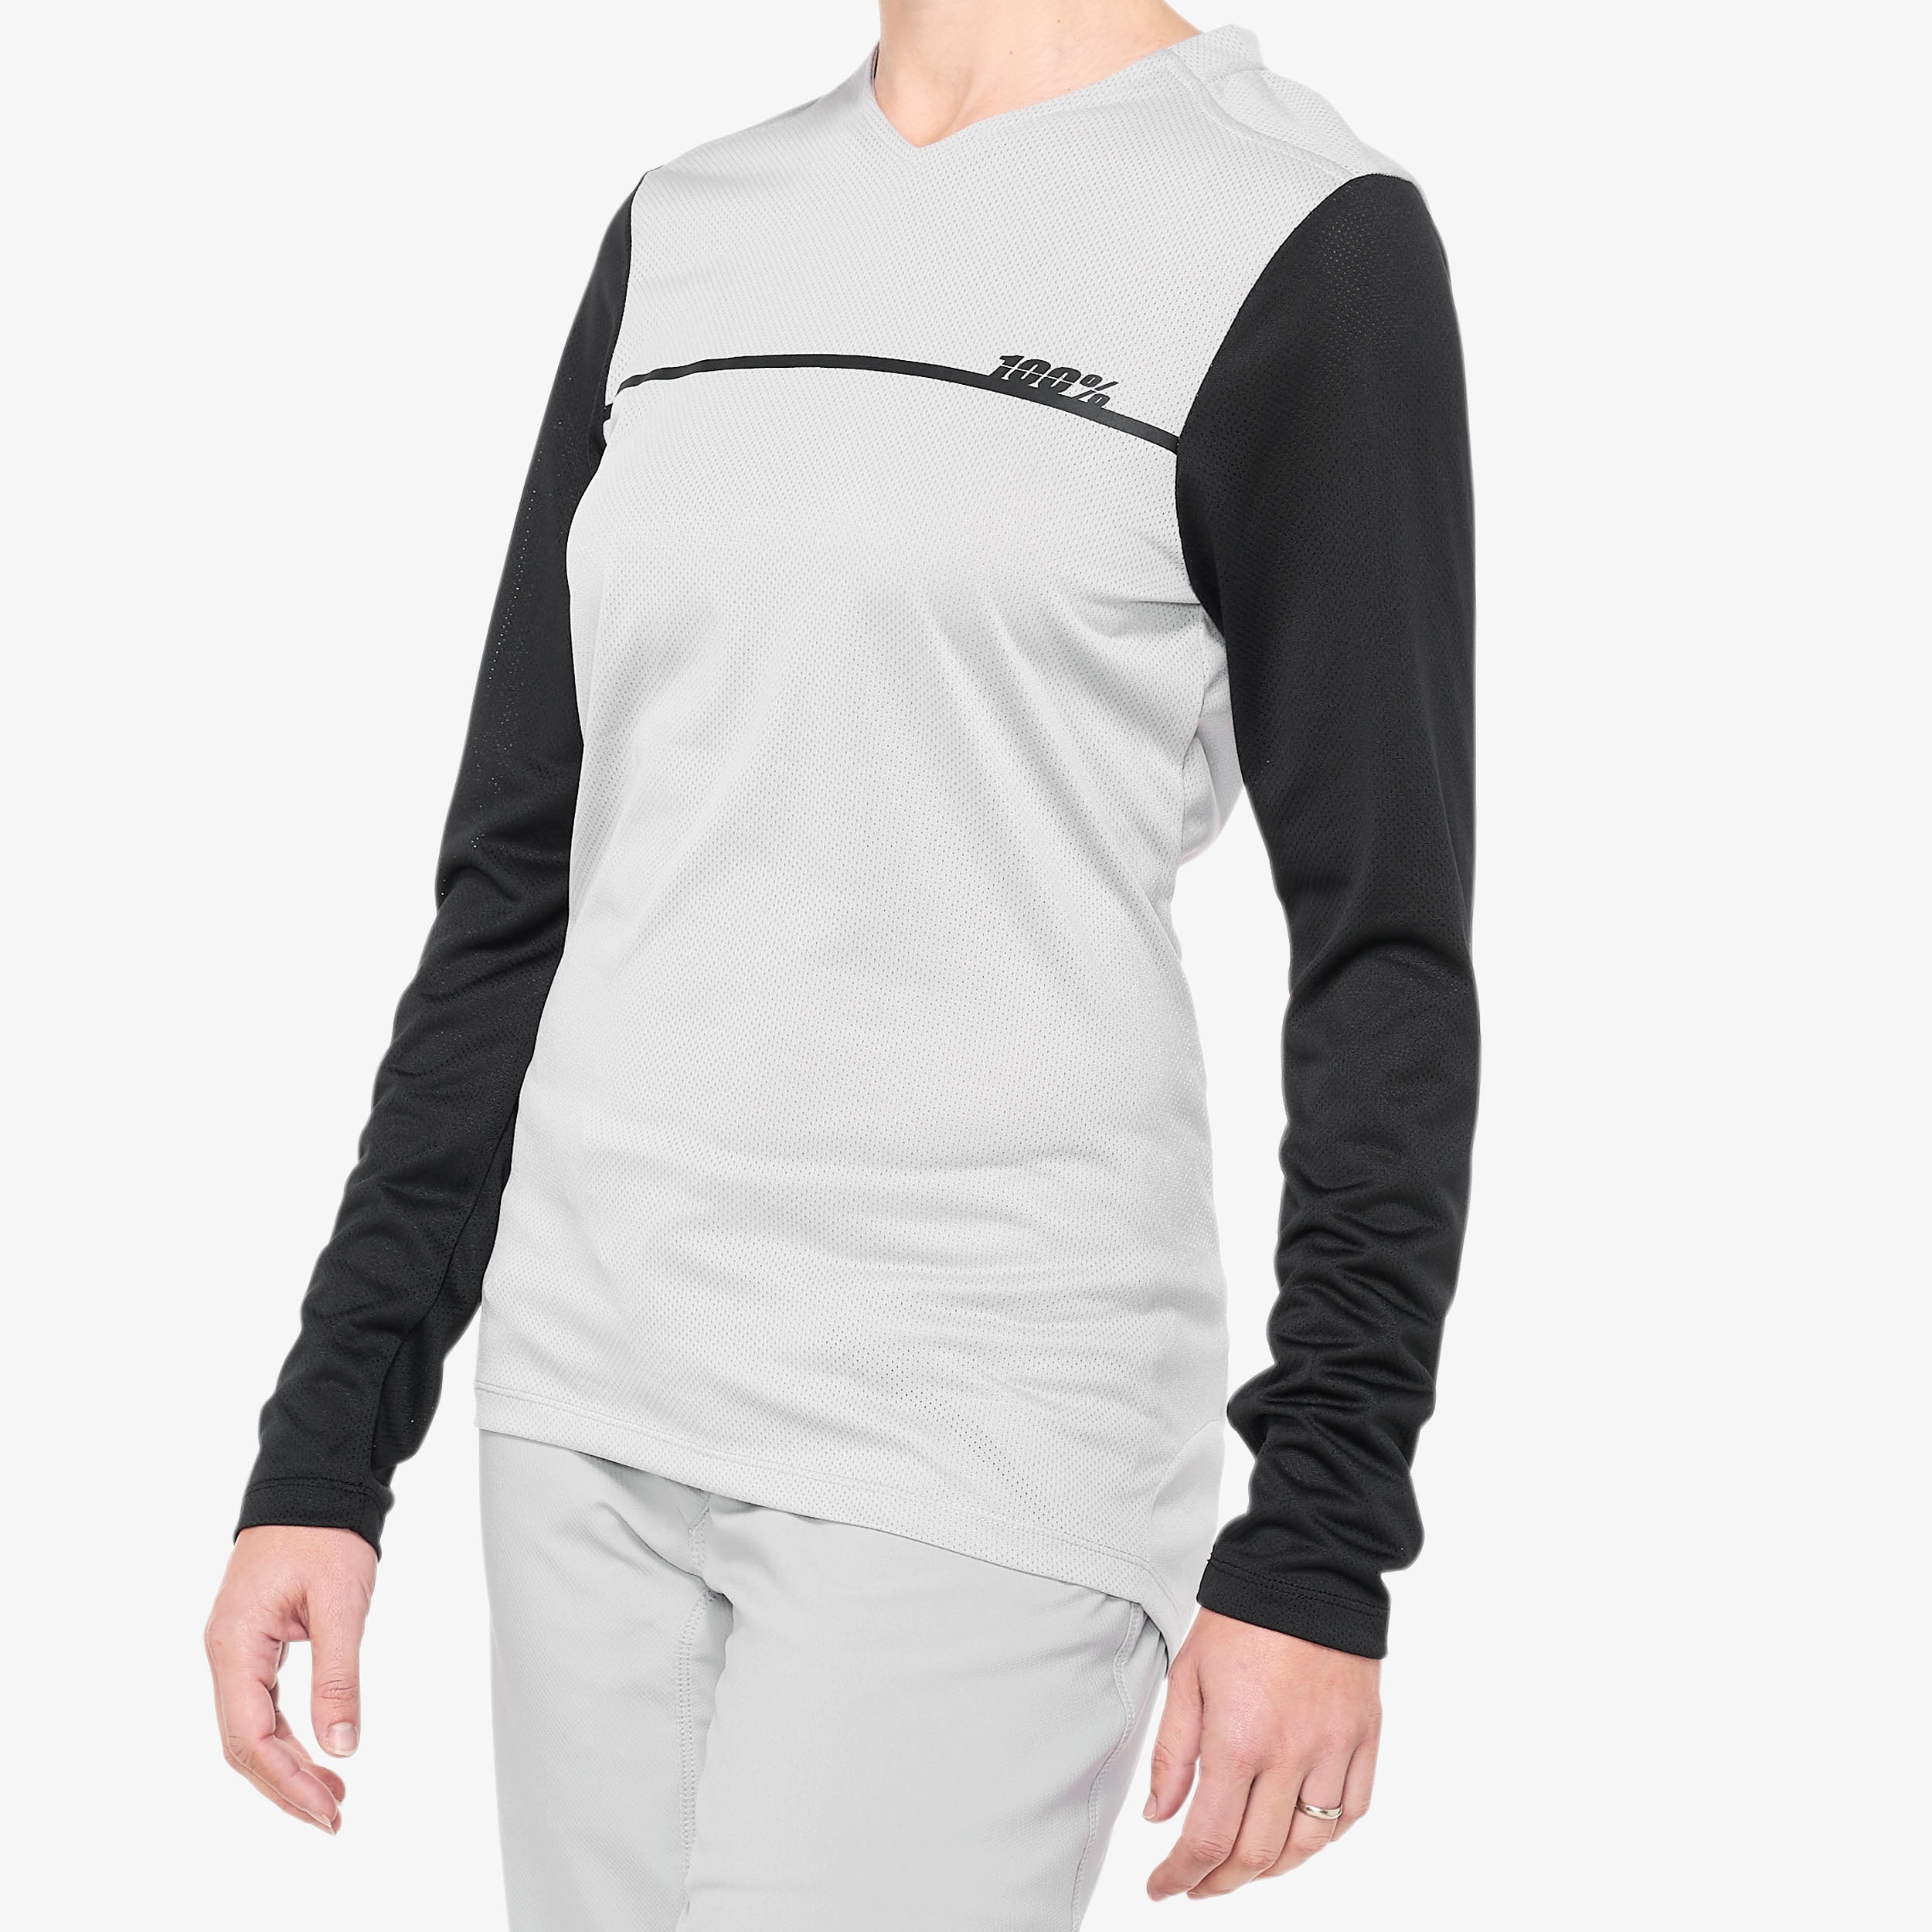 RIDECAMP Women's Long Sleeve Jersey Grey/Black